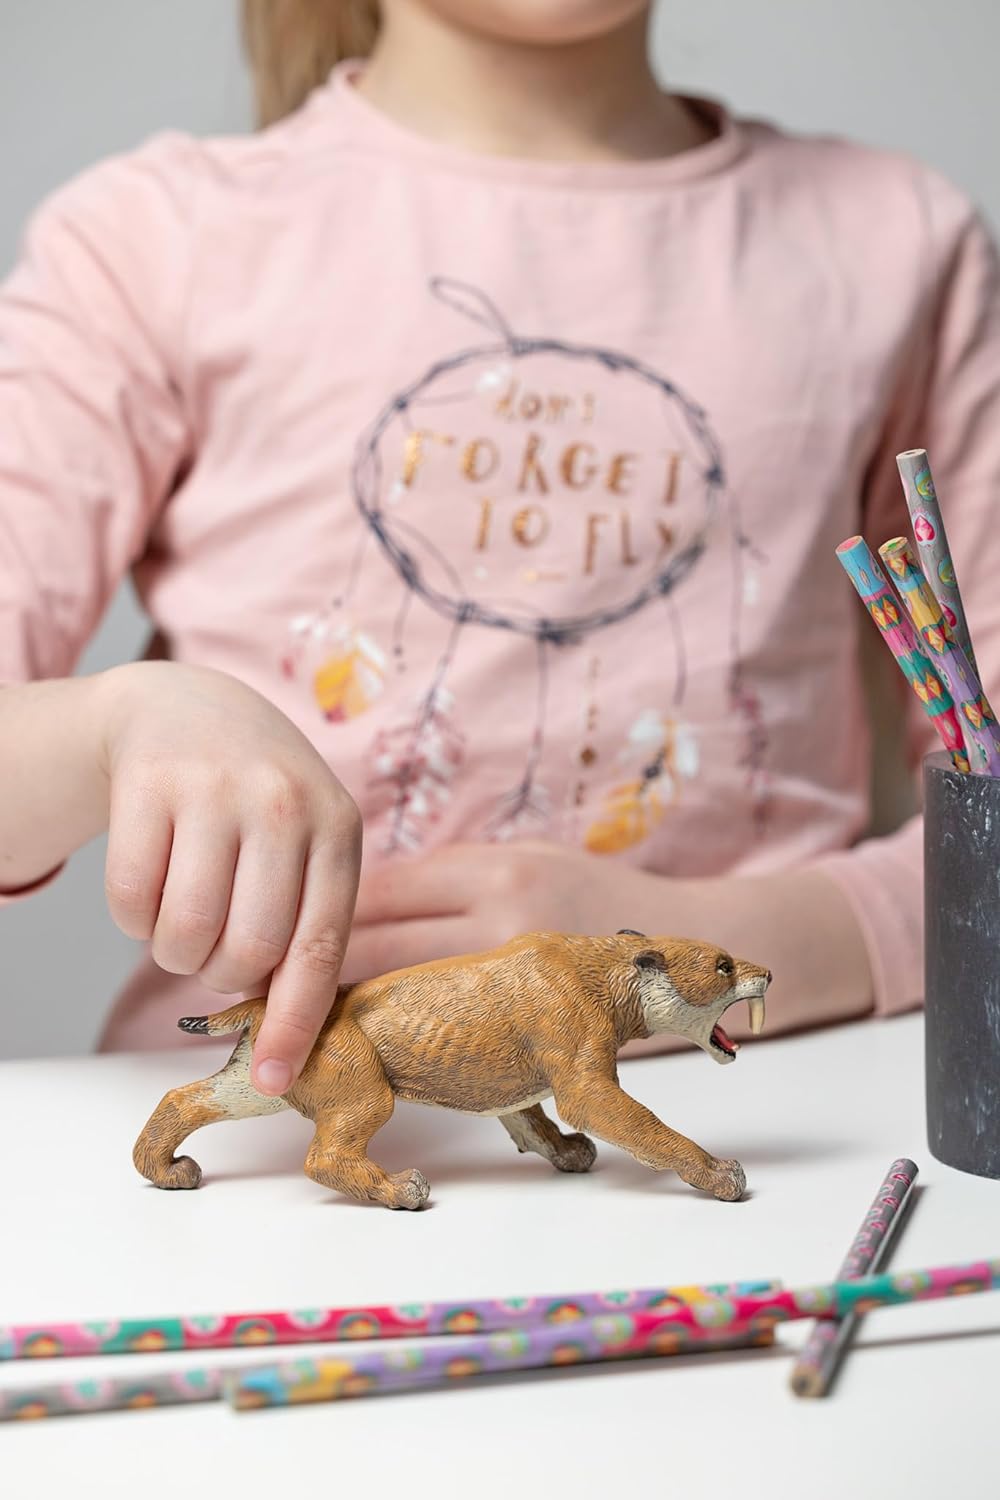 Smilodon, Saber-Tooth Cat Animal Replica Toy